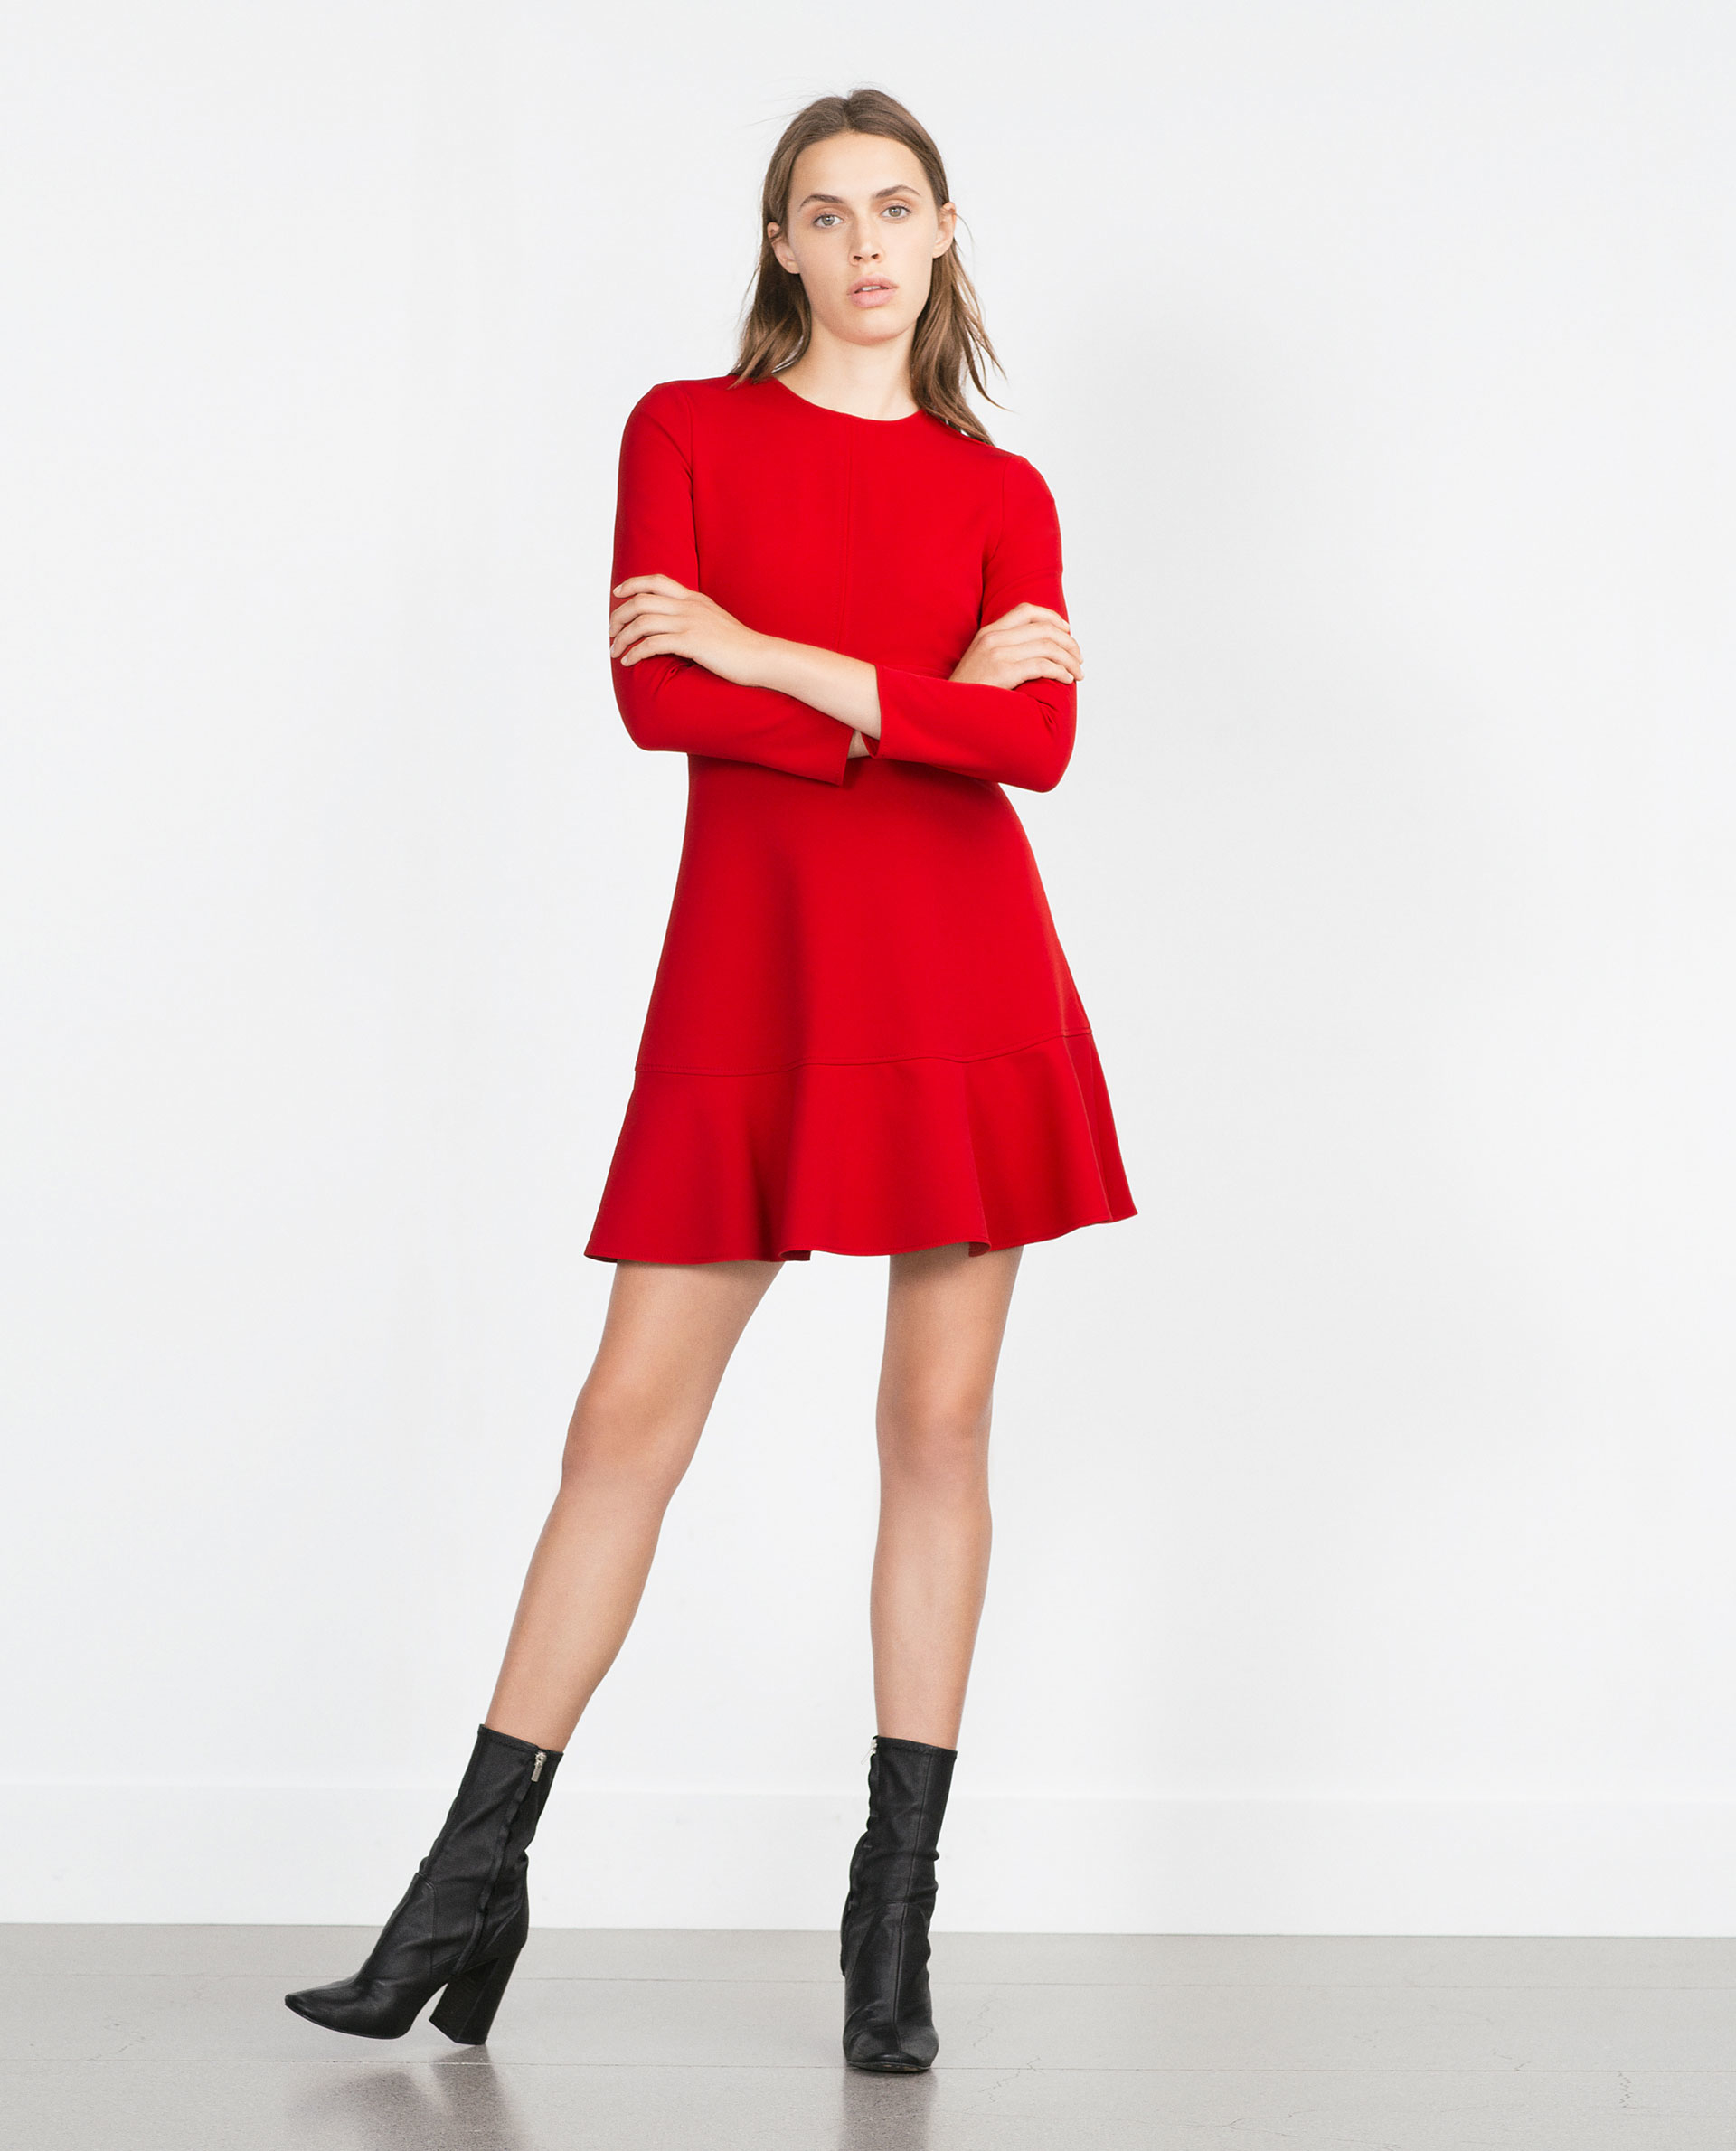  Zara  Skater Dress  in Red  Lyst